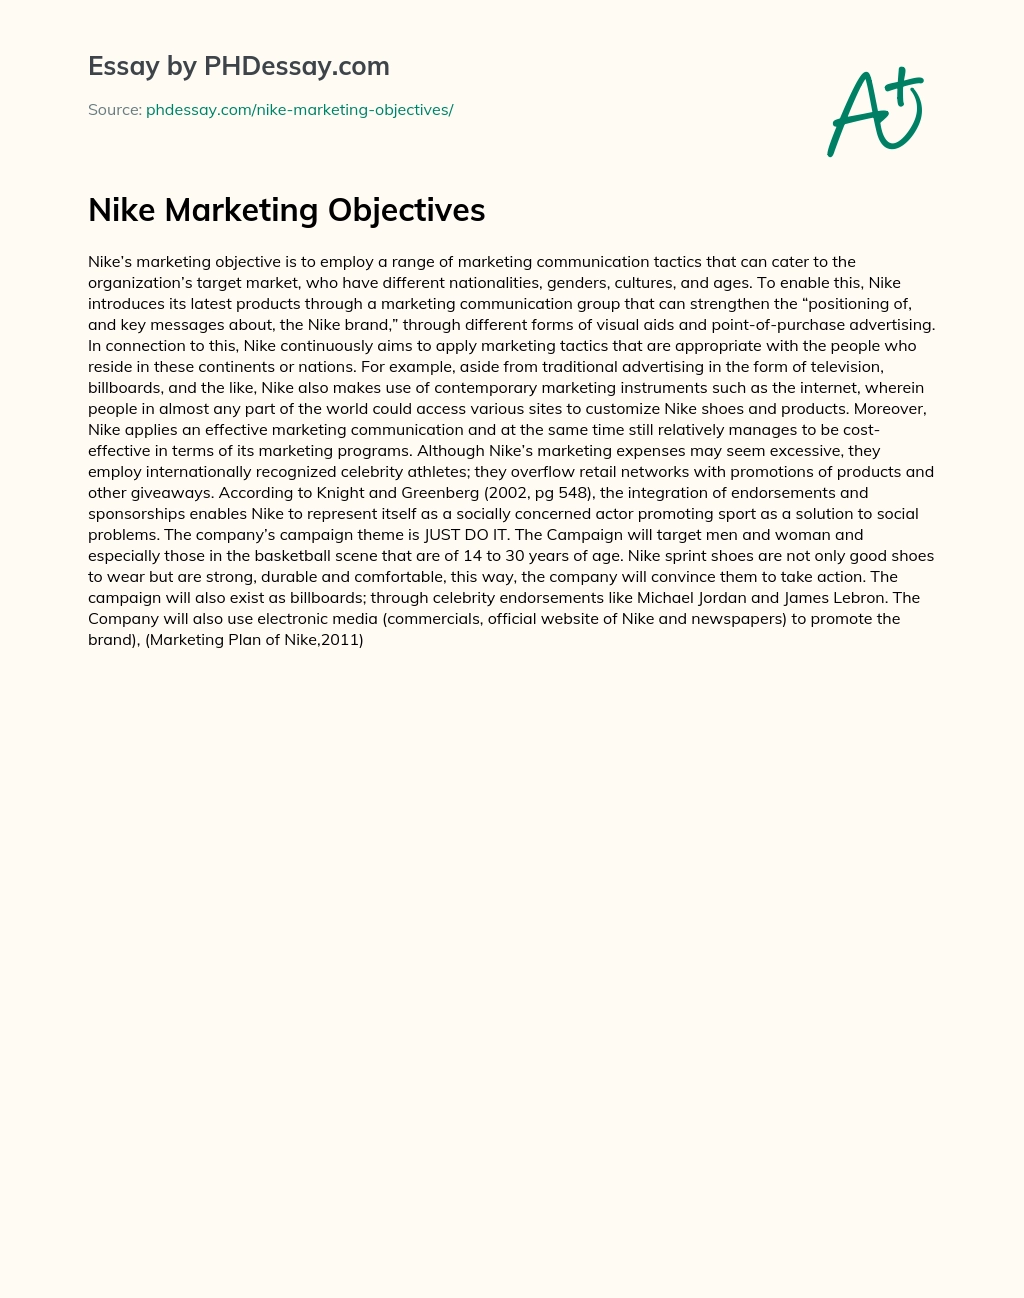 Nike Marketing Objectives essay